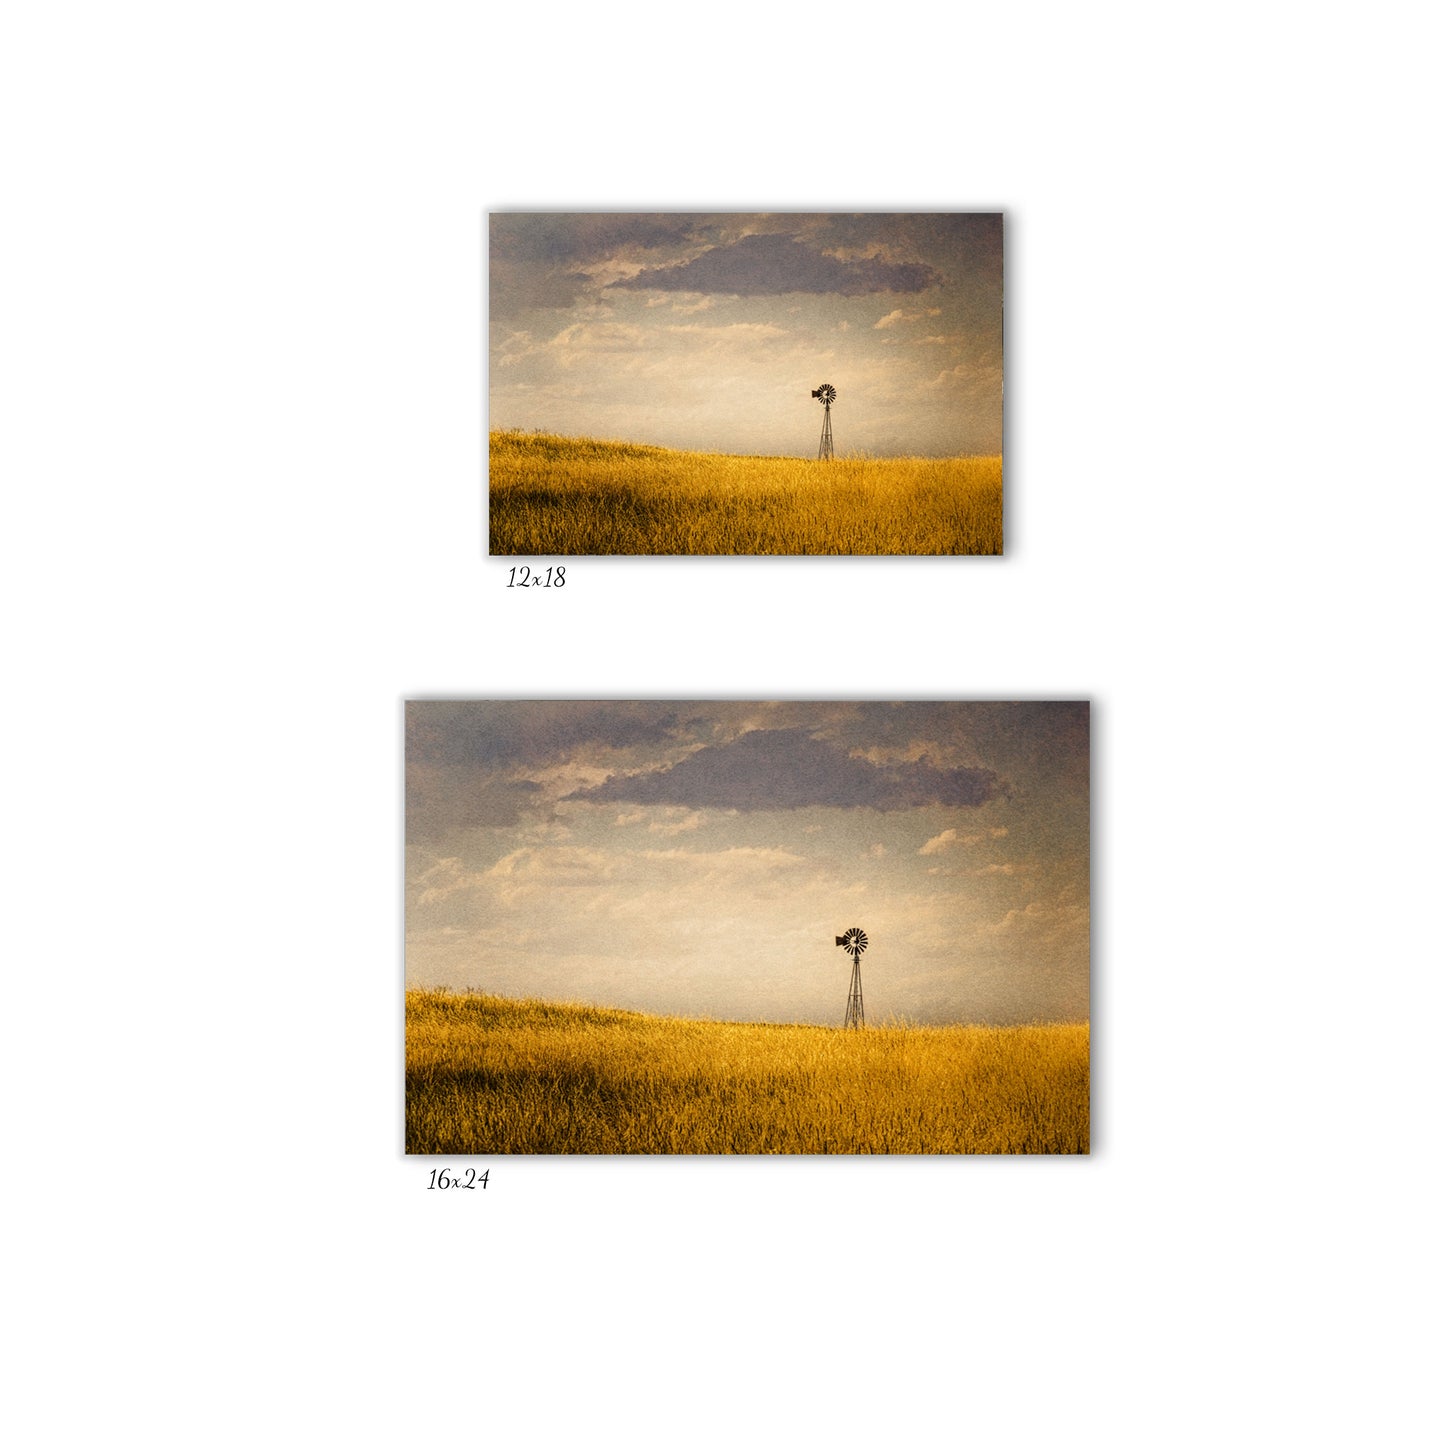 Visual representation of the Nebraska windmill canvas wall art print sizes available: 12x18 and 16x24.